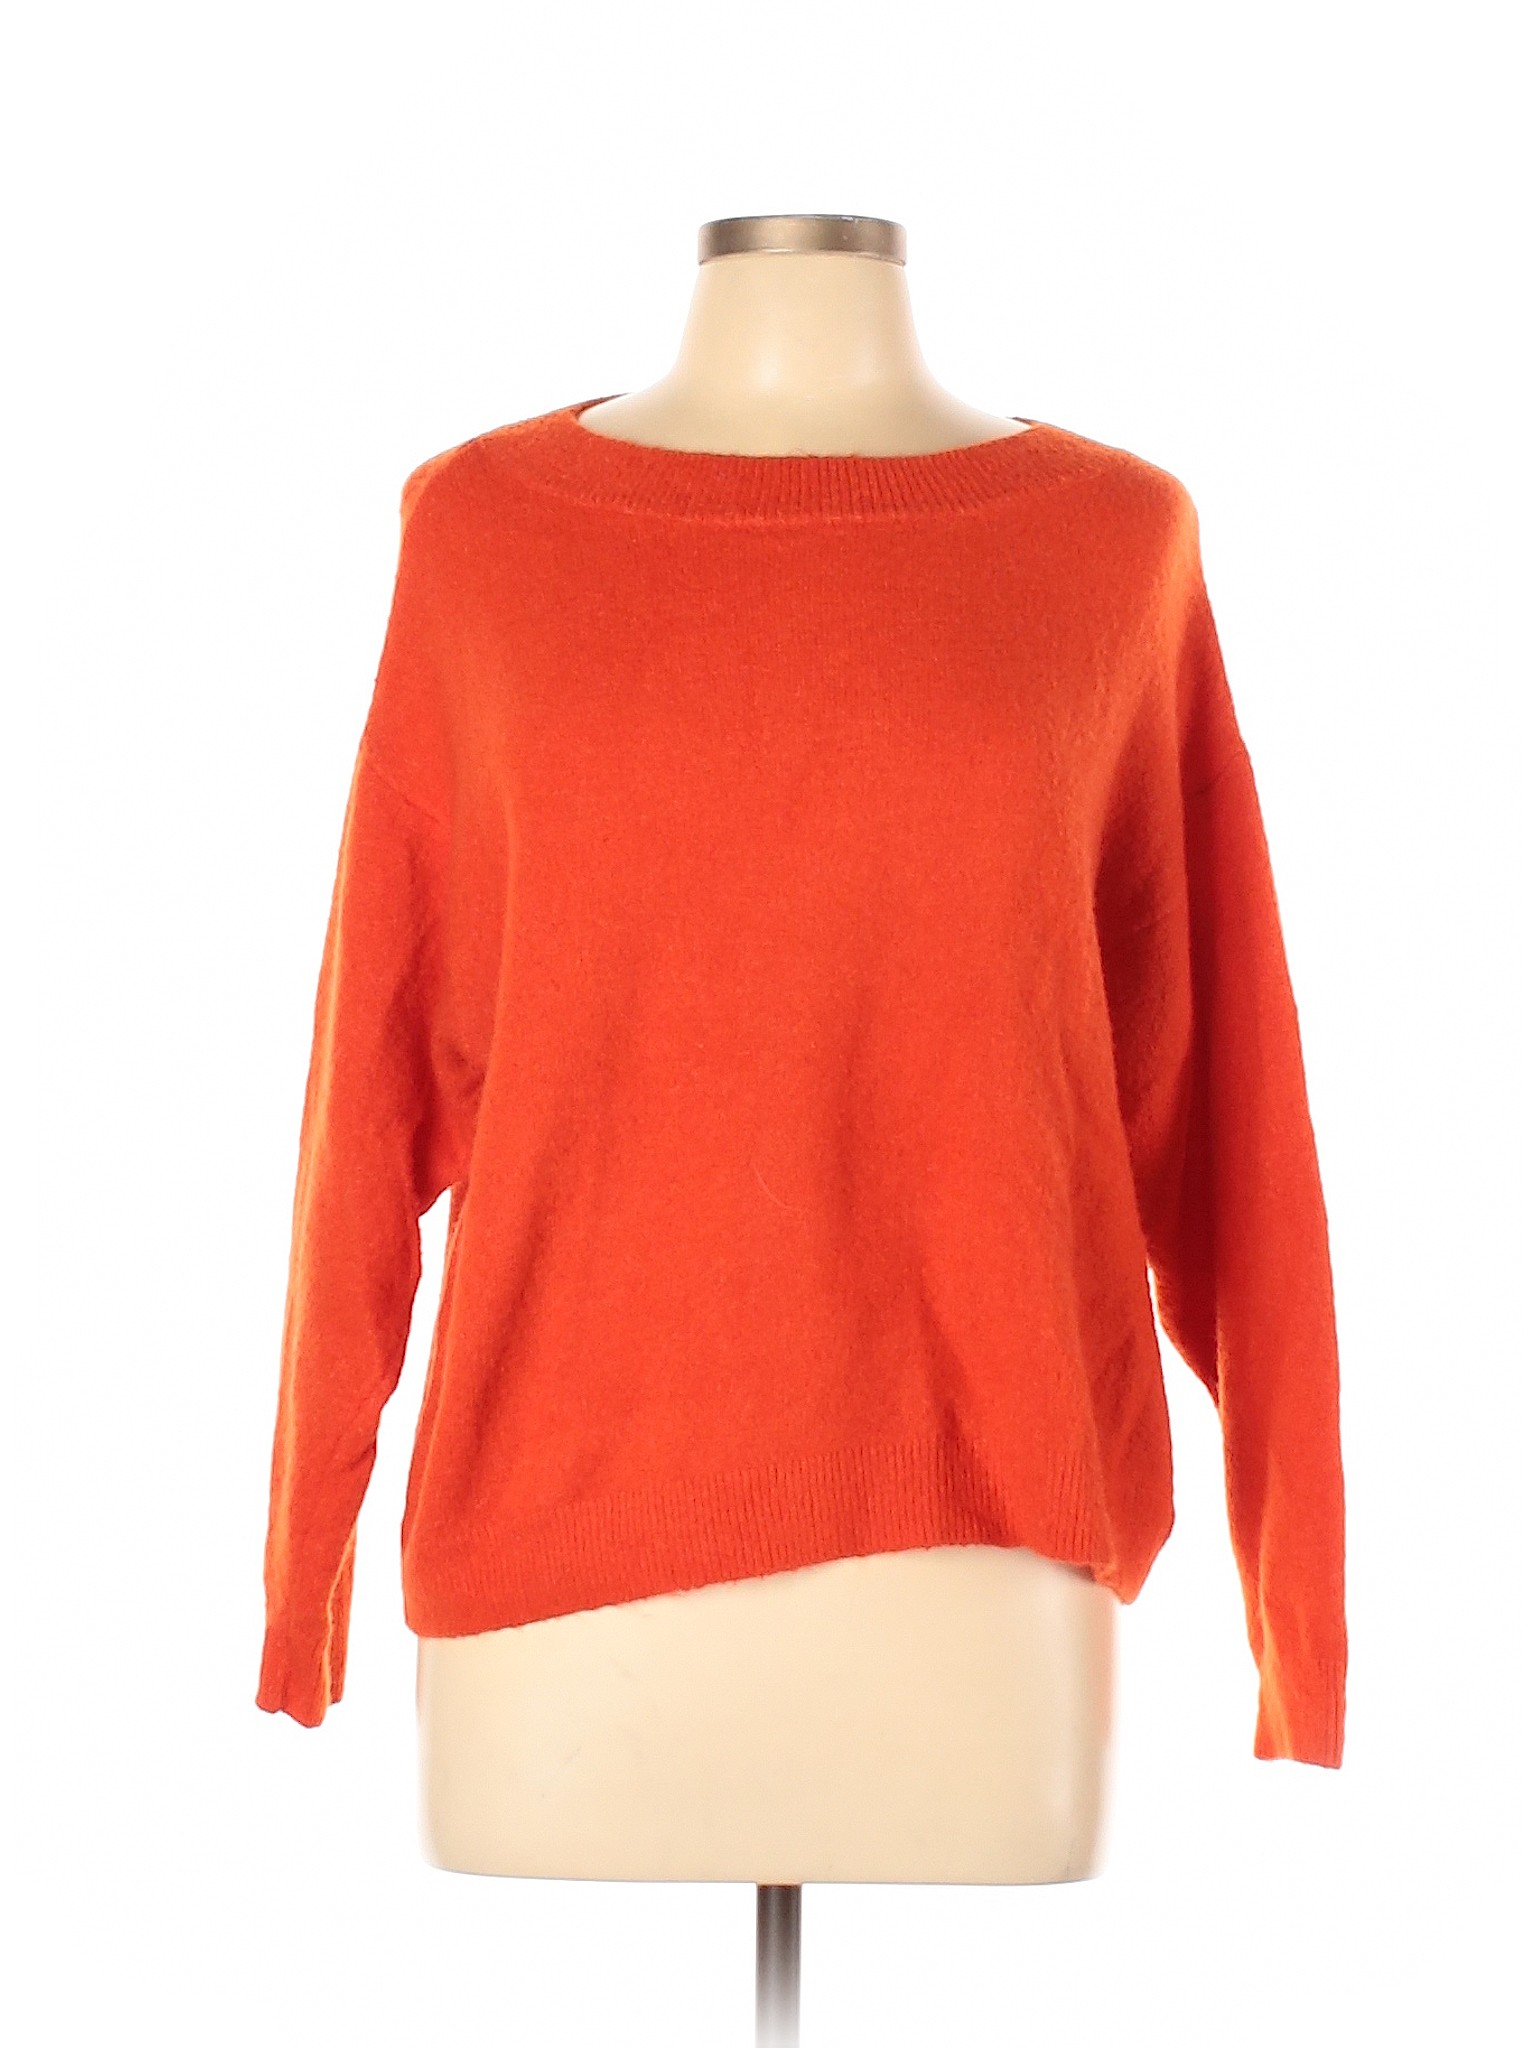 H&M Women Orange Pullover Sweater L | eBay